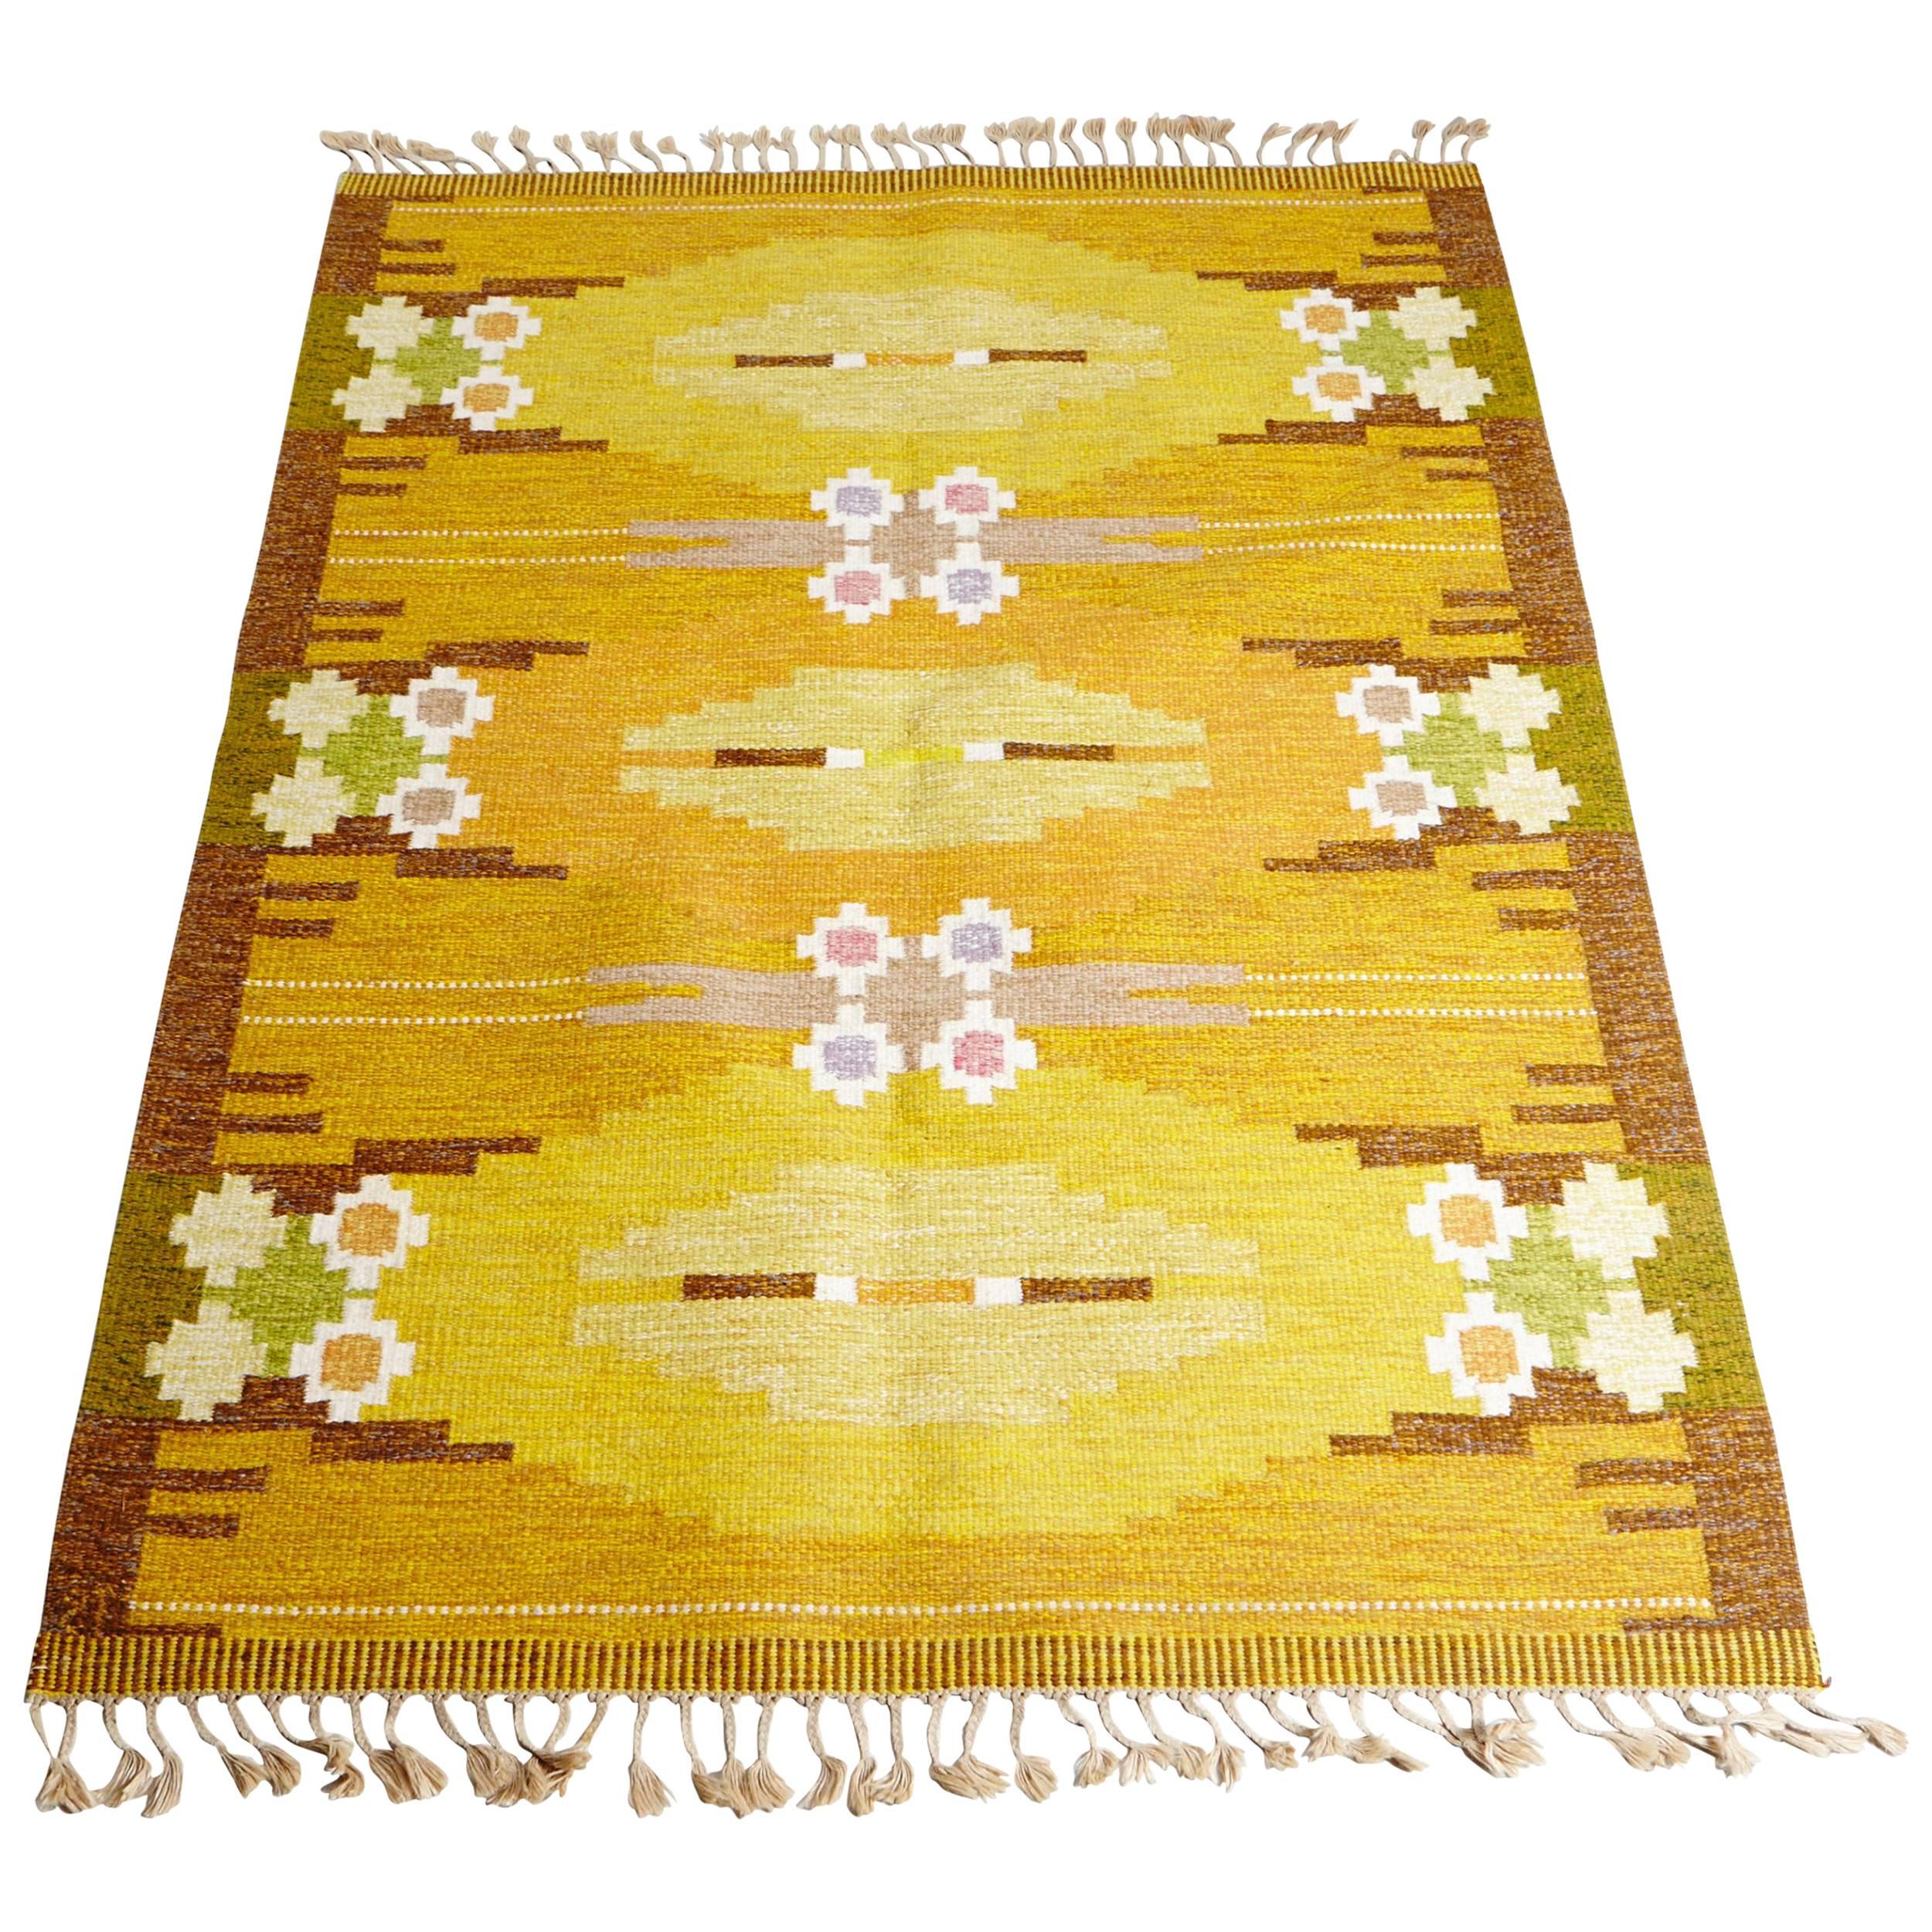 Ingegerd Silow Carpet, Signed IS, Sweden, 1940s